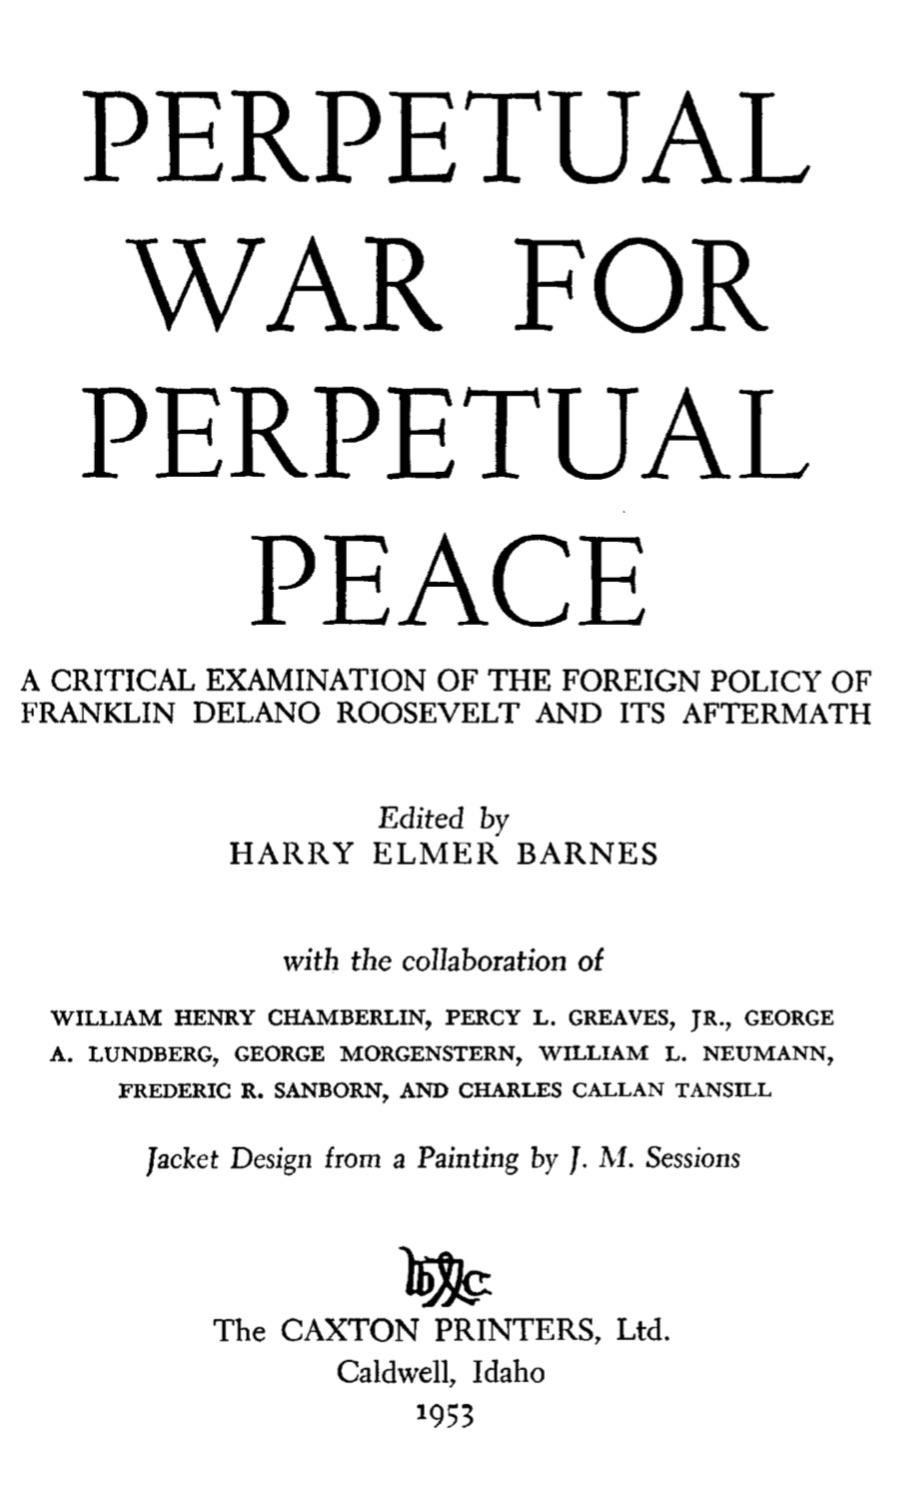 Perpetual War for Perpetual Peace (1953) by Harry Elmer Barnes